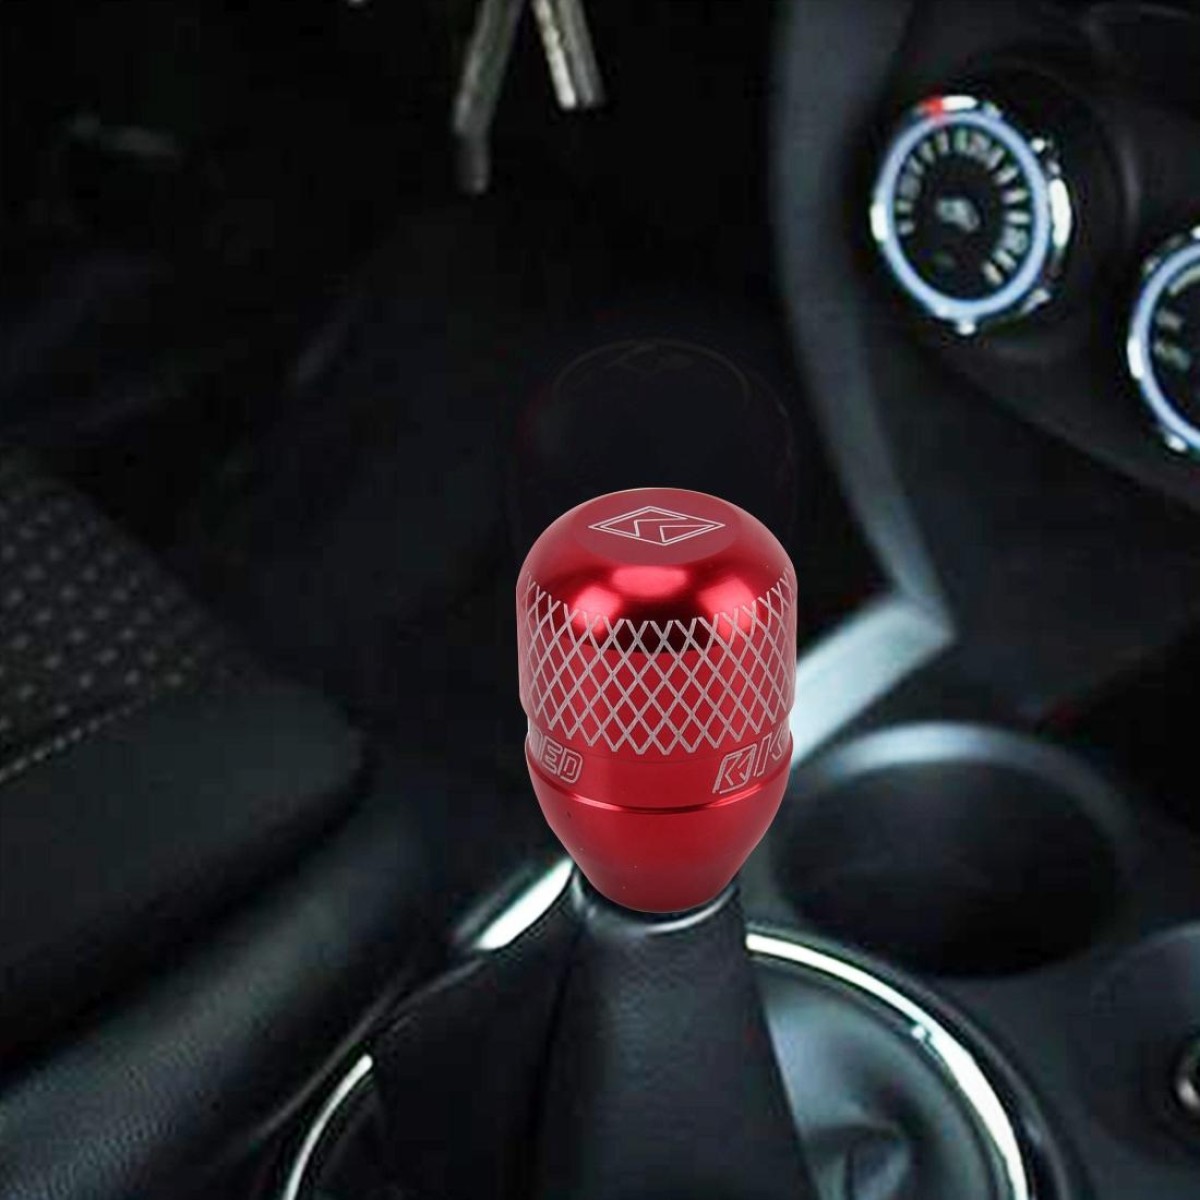 Universal Car Gear Shift Knob Modified Car Gear Shift Knob Auto Transmission Shift Lever Knob Gear Knobs(Red)